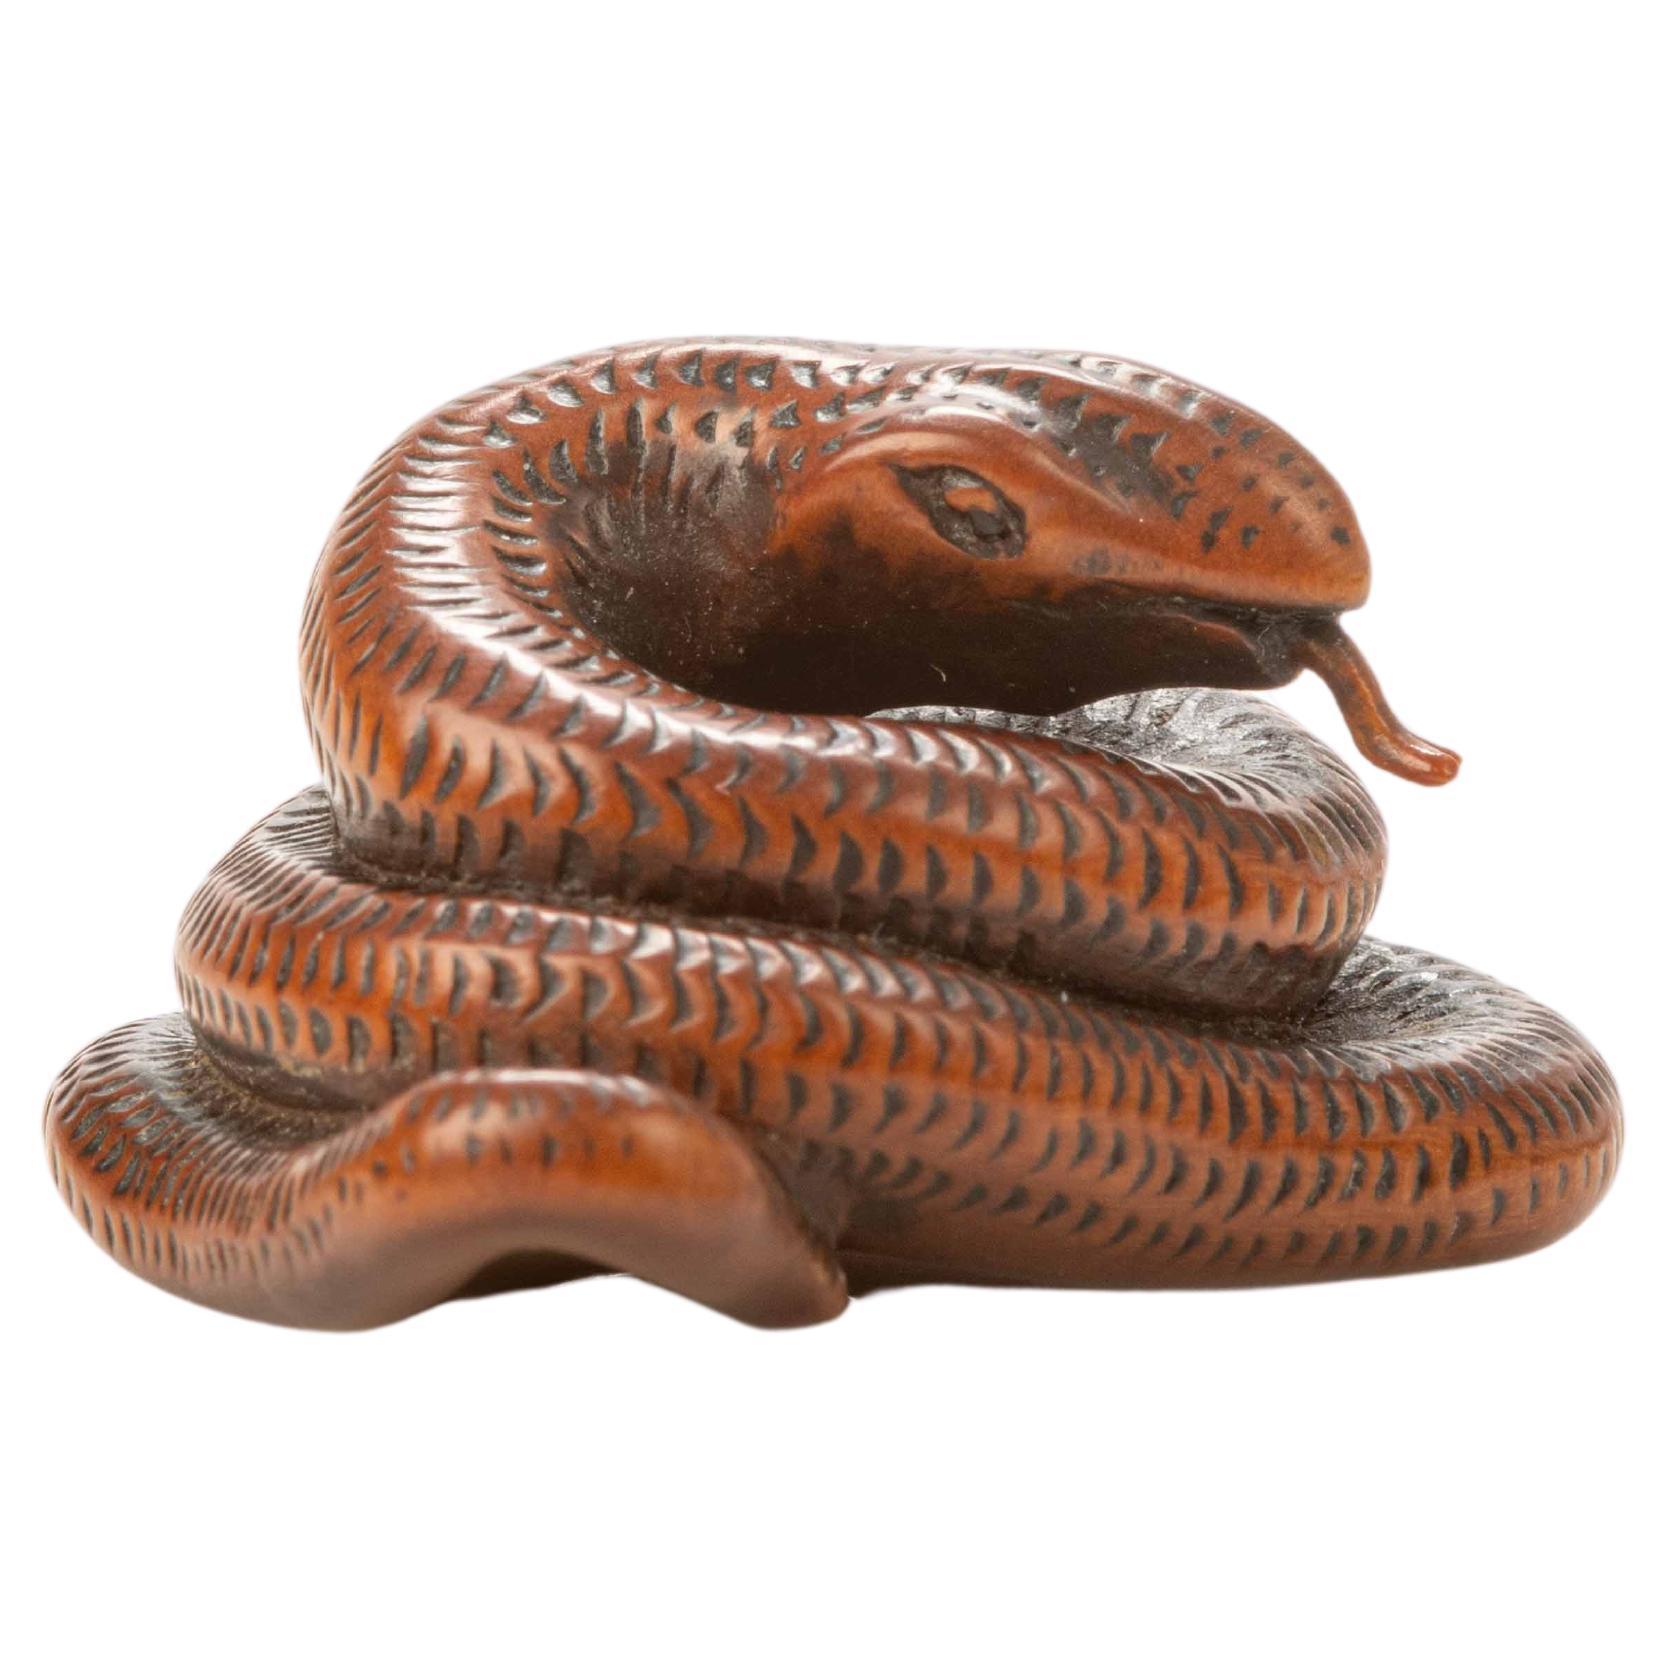 A boxwood netsuke depicting a snake